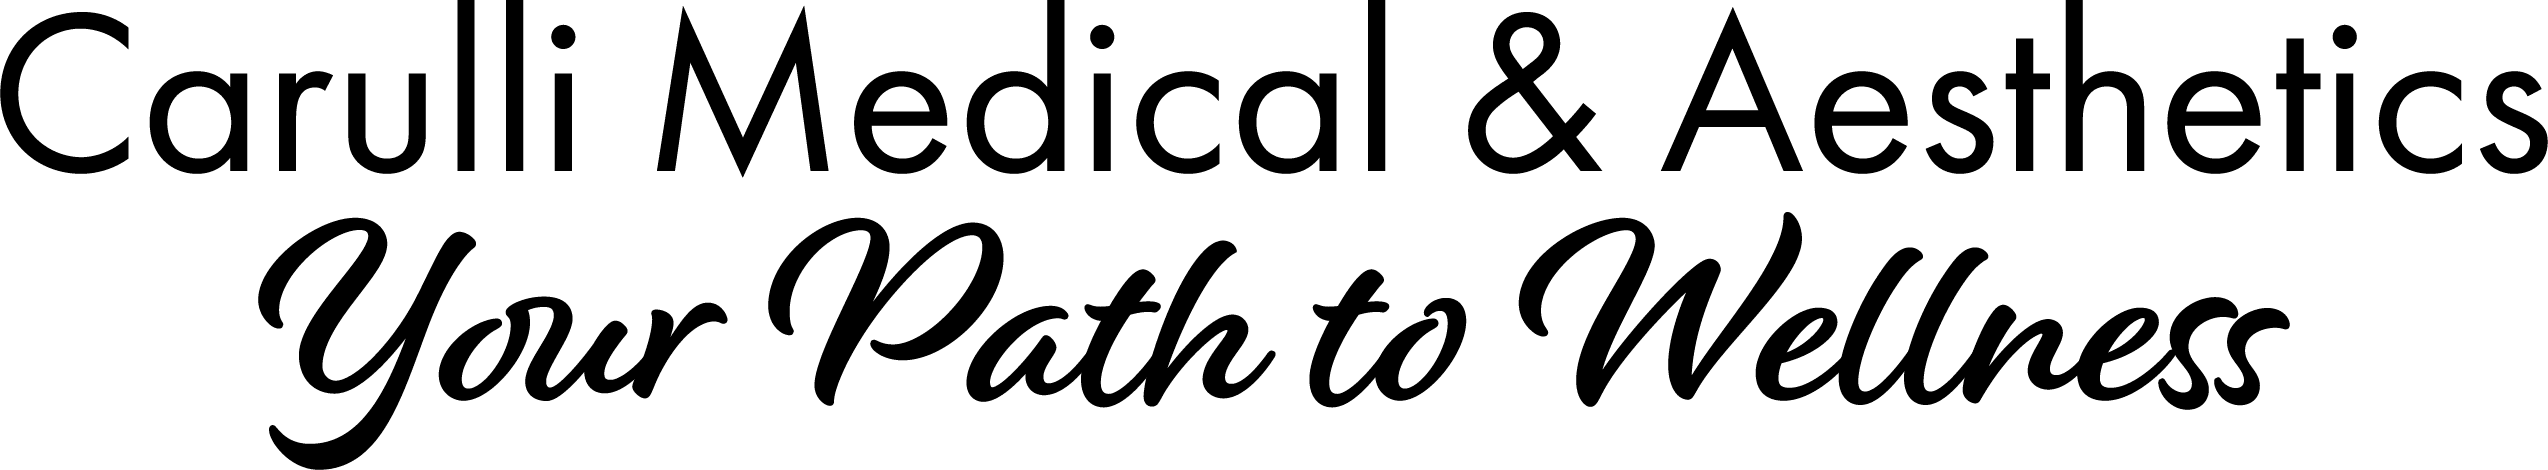 Carulli Medical & Aesthetics